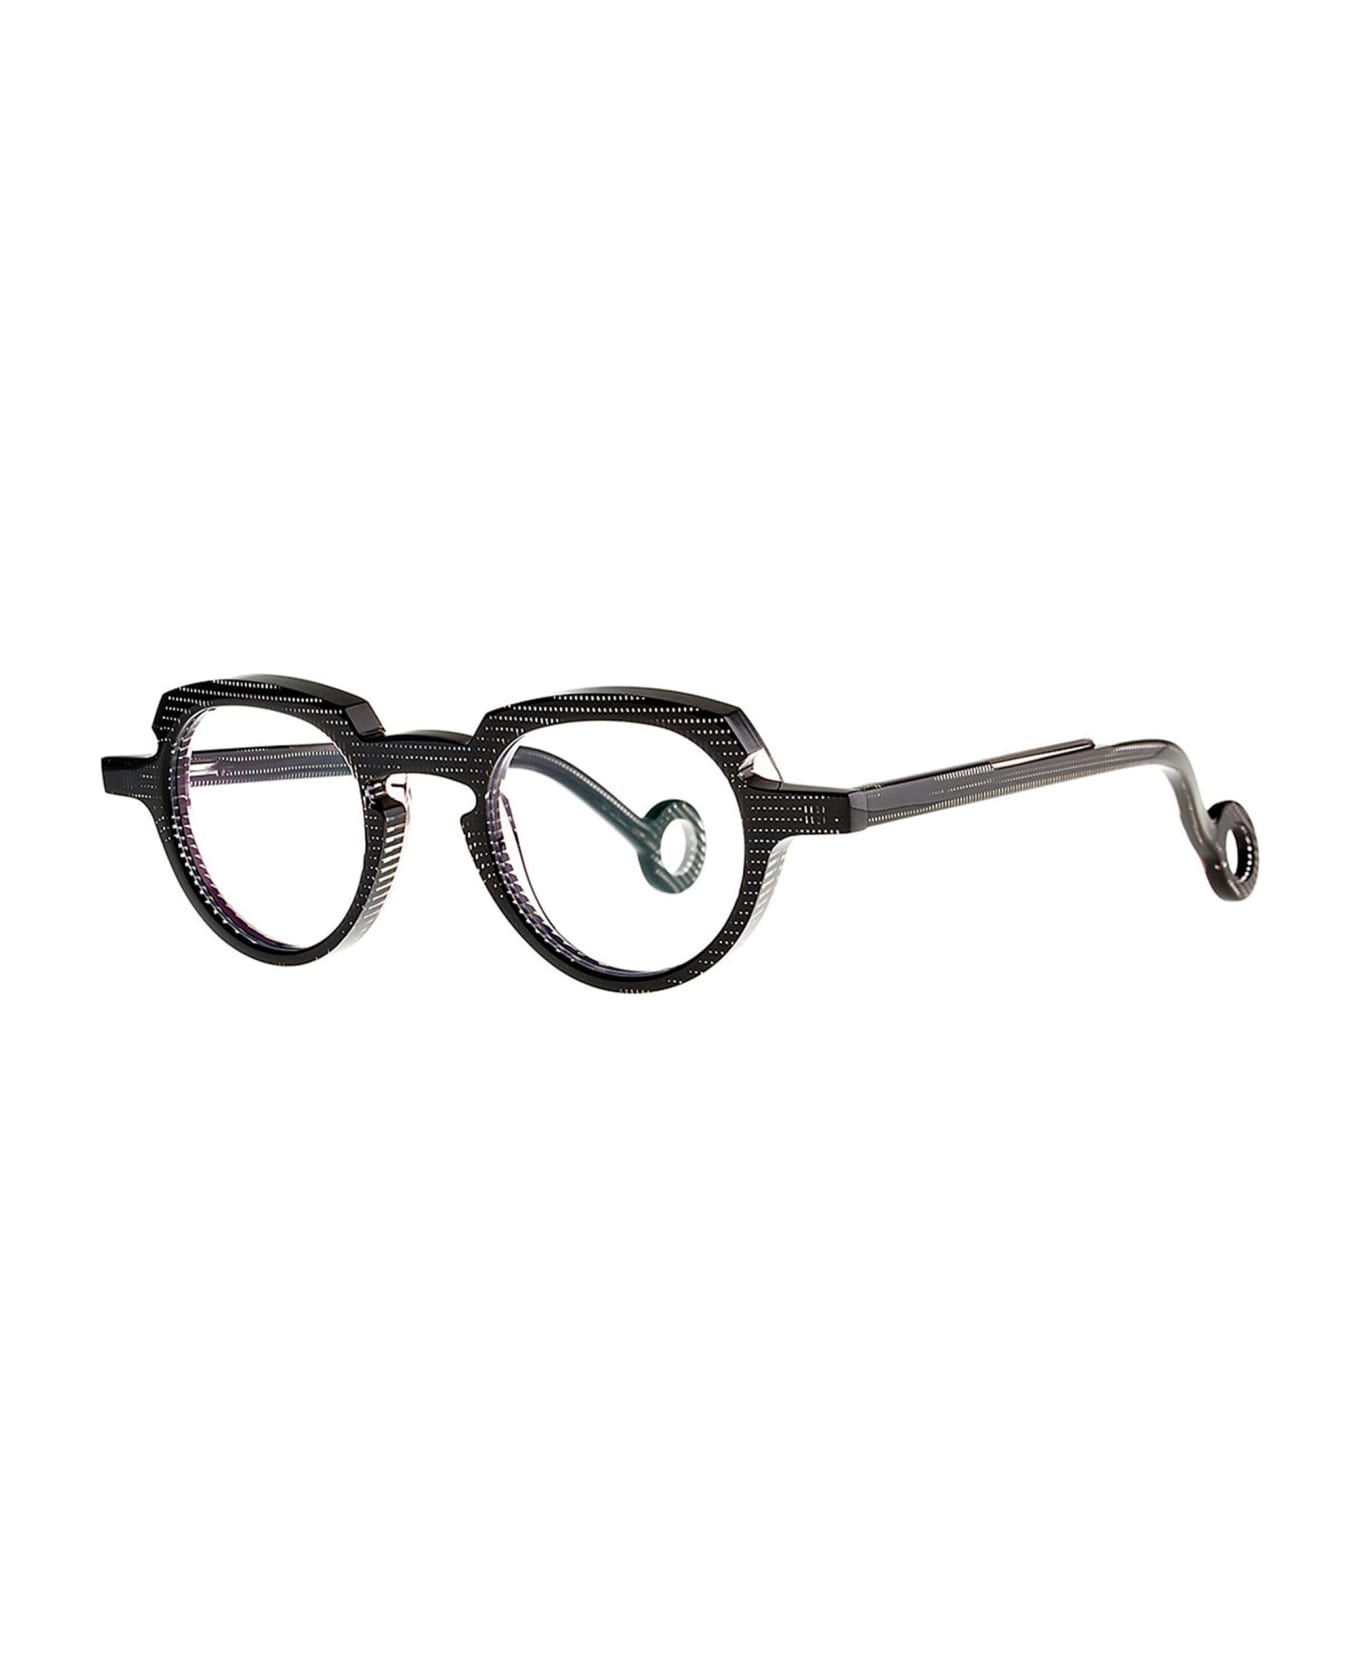 Theo Eyewear Andy - 015 Rx Glasses - Black